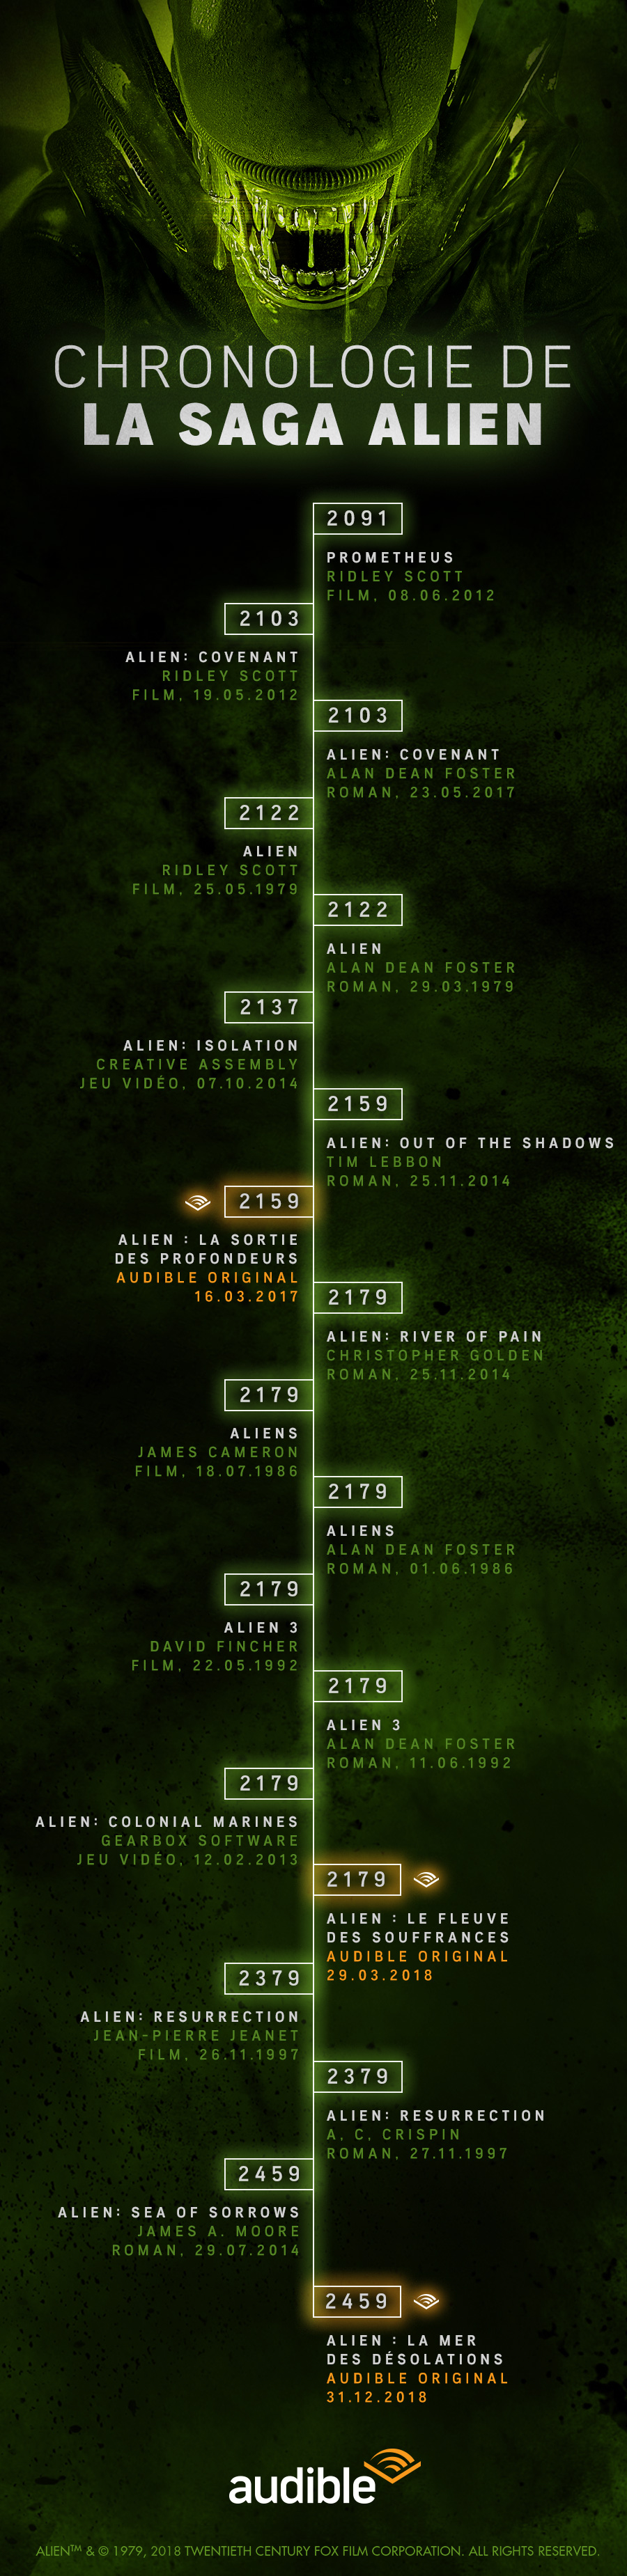 chronologie-de-la-saga-alien-Infographie